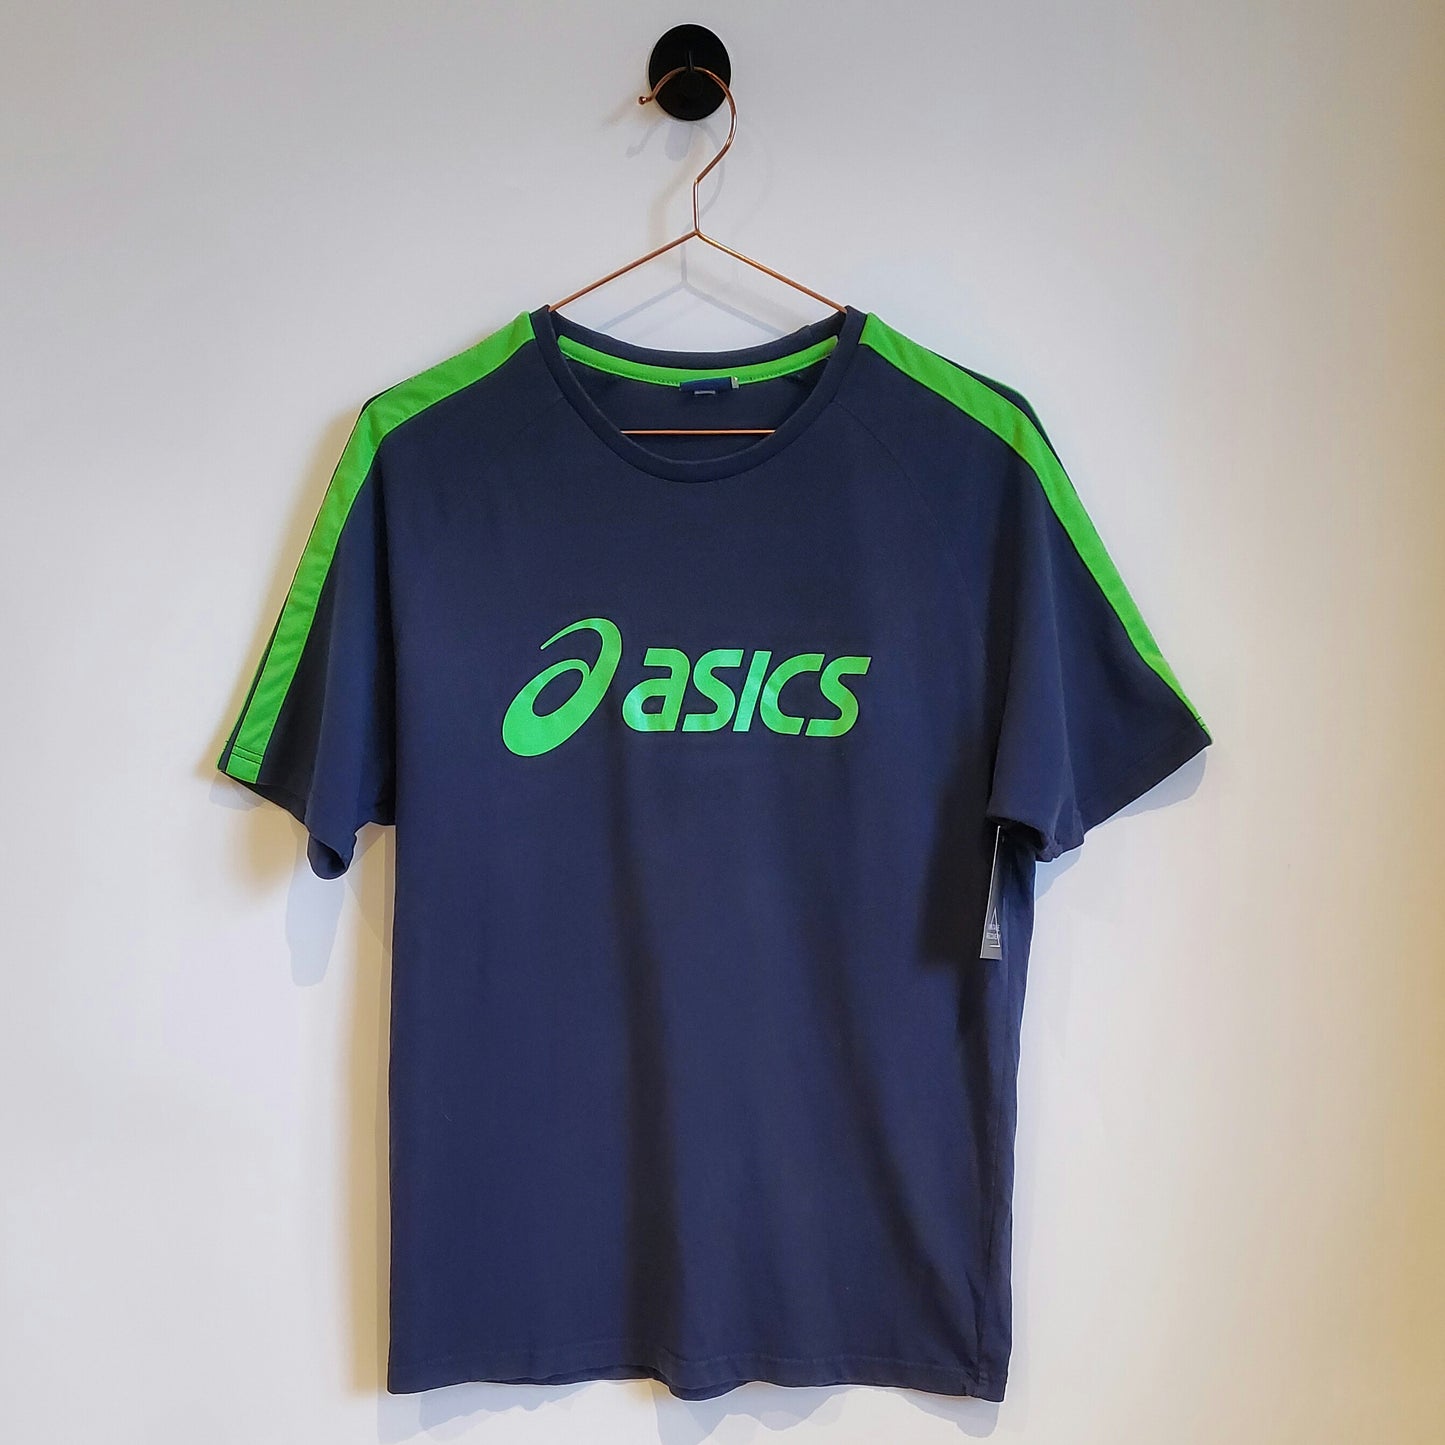 Vintage 90s Asics T-shirt | Size M